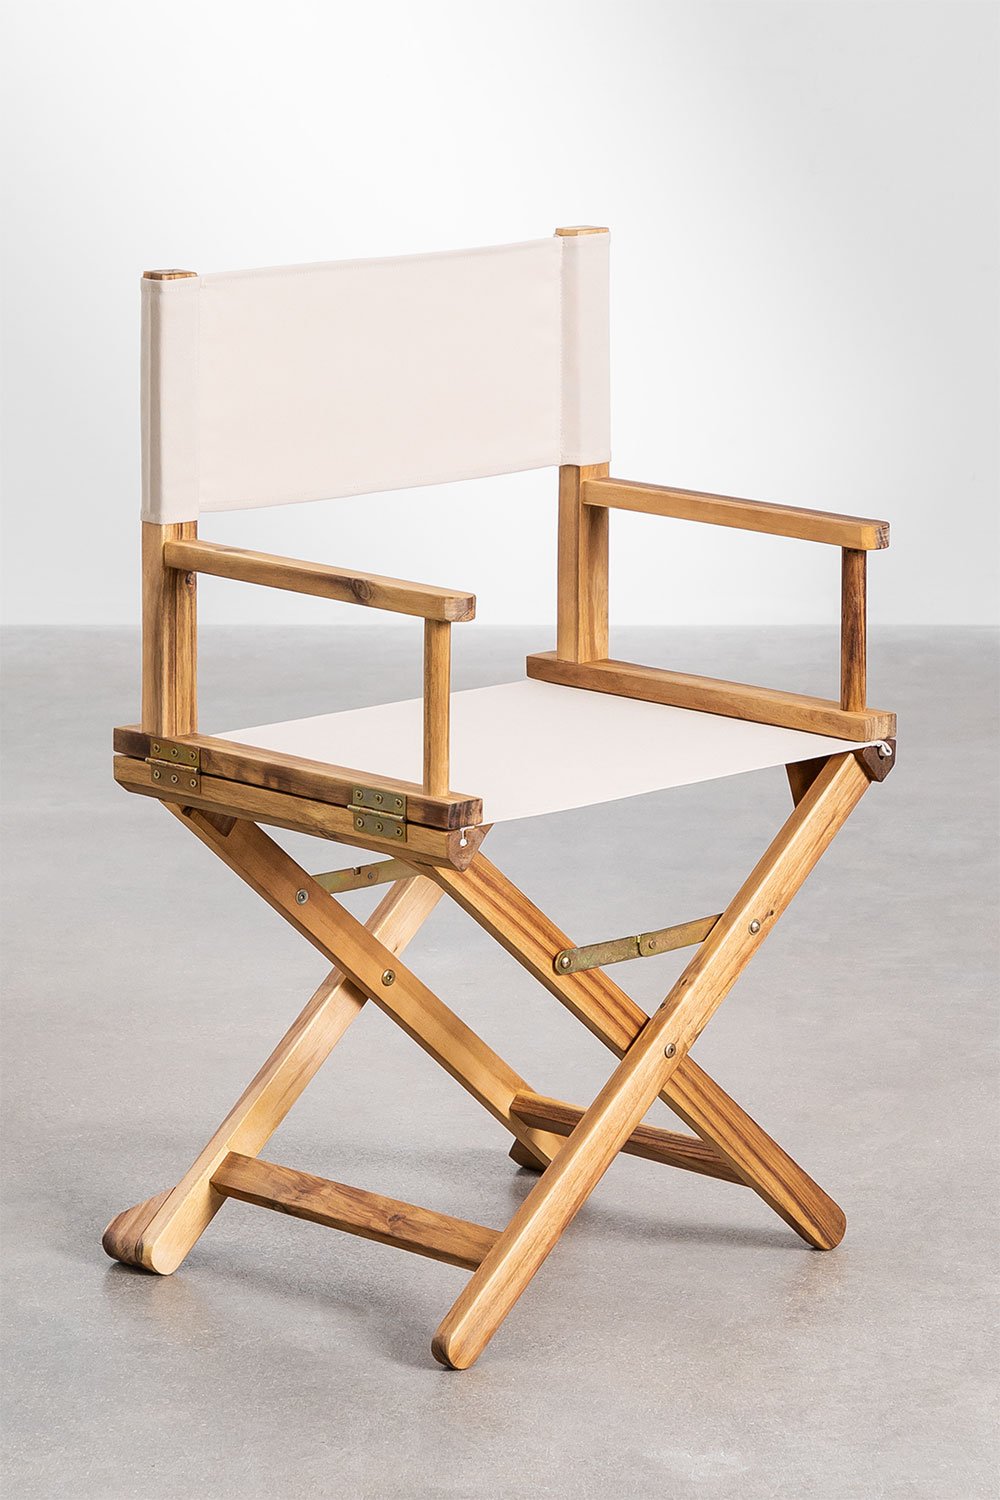 Ridley opvouwbare houten regisseursstoel, galerij beeld 1